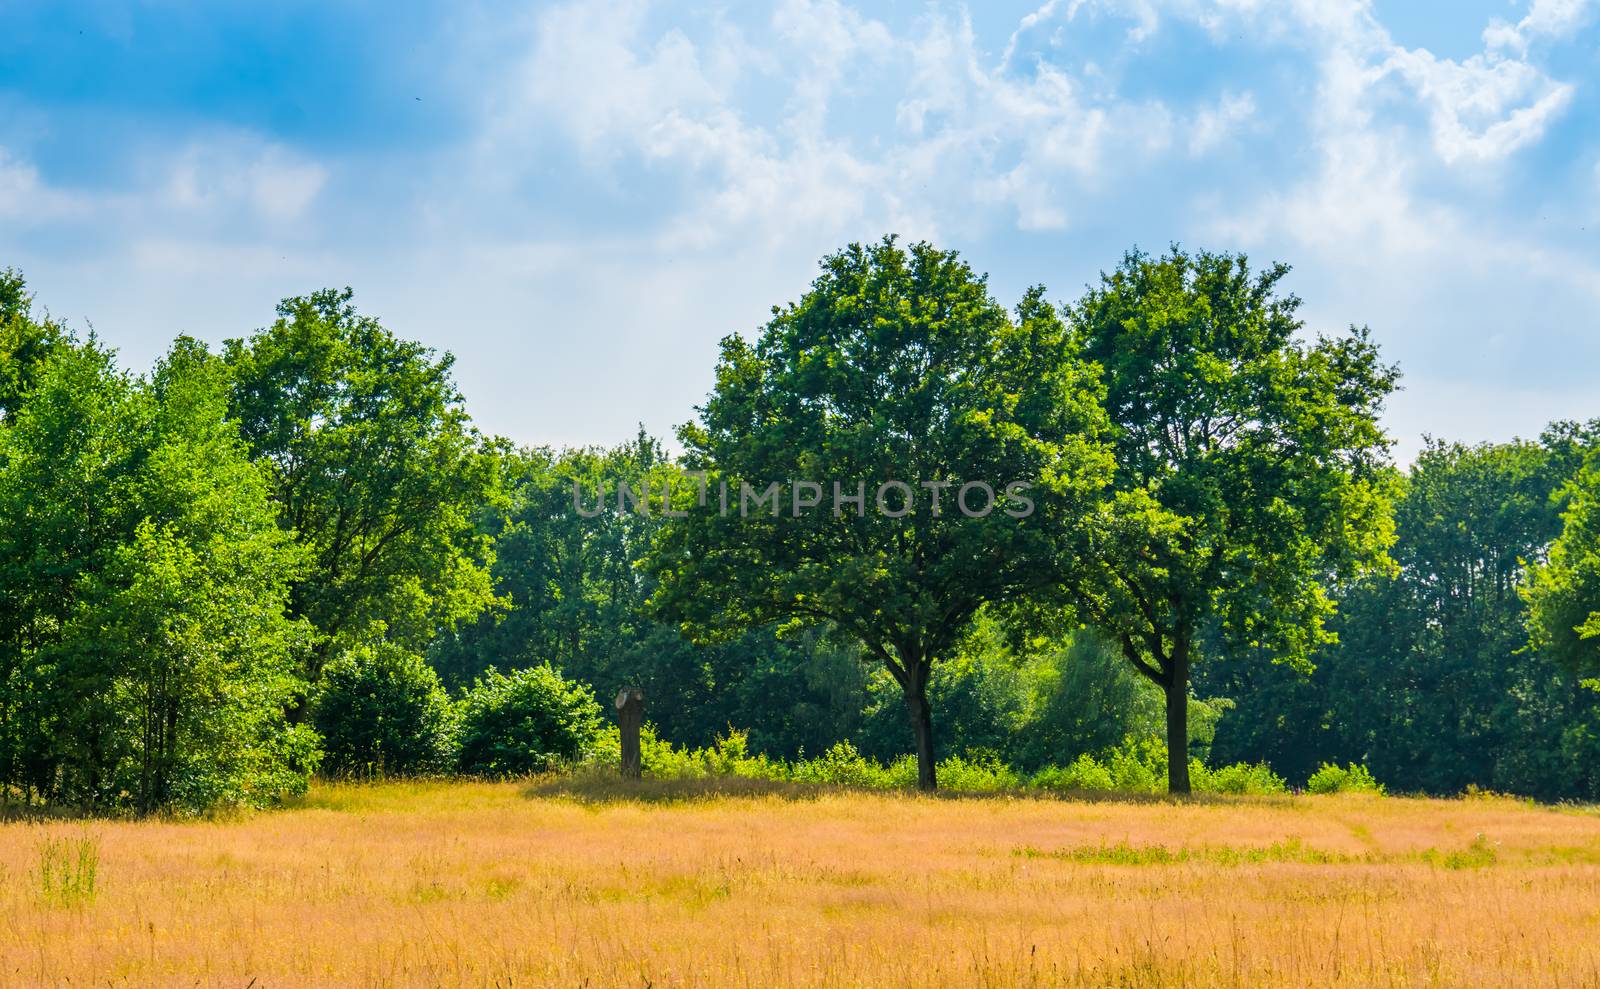 Golden grass meadow with trees and blue sky, Beautiful landscape in the Melanen, Halsteren, Bergen op zoom, The netherlands by charlottebleijenberg